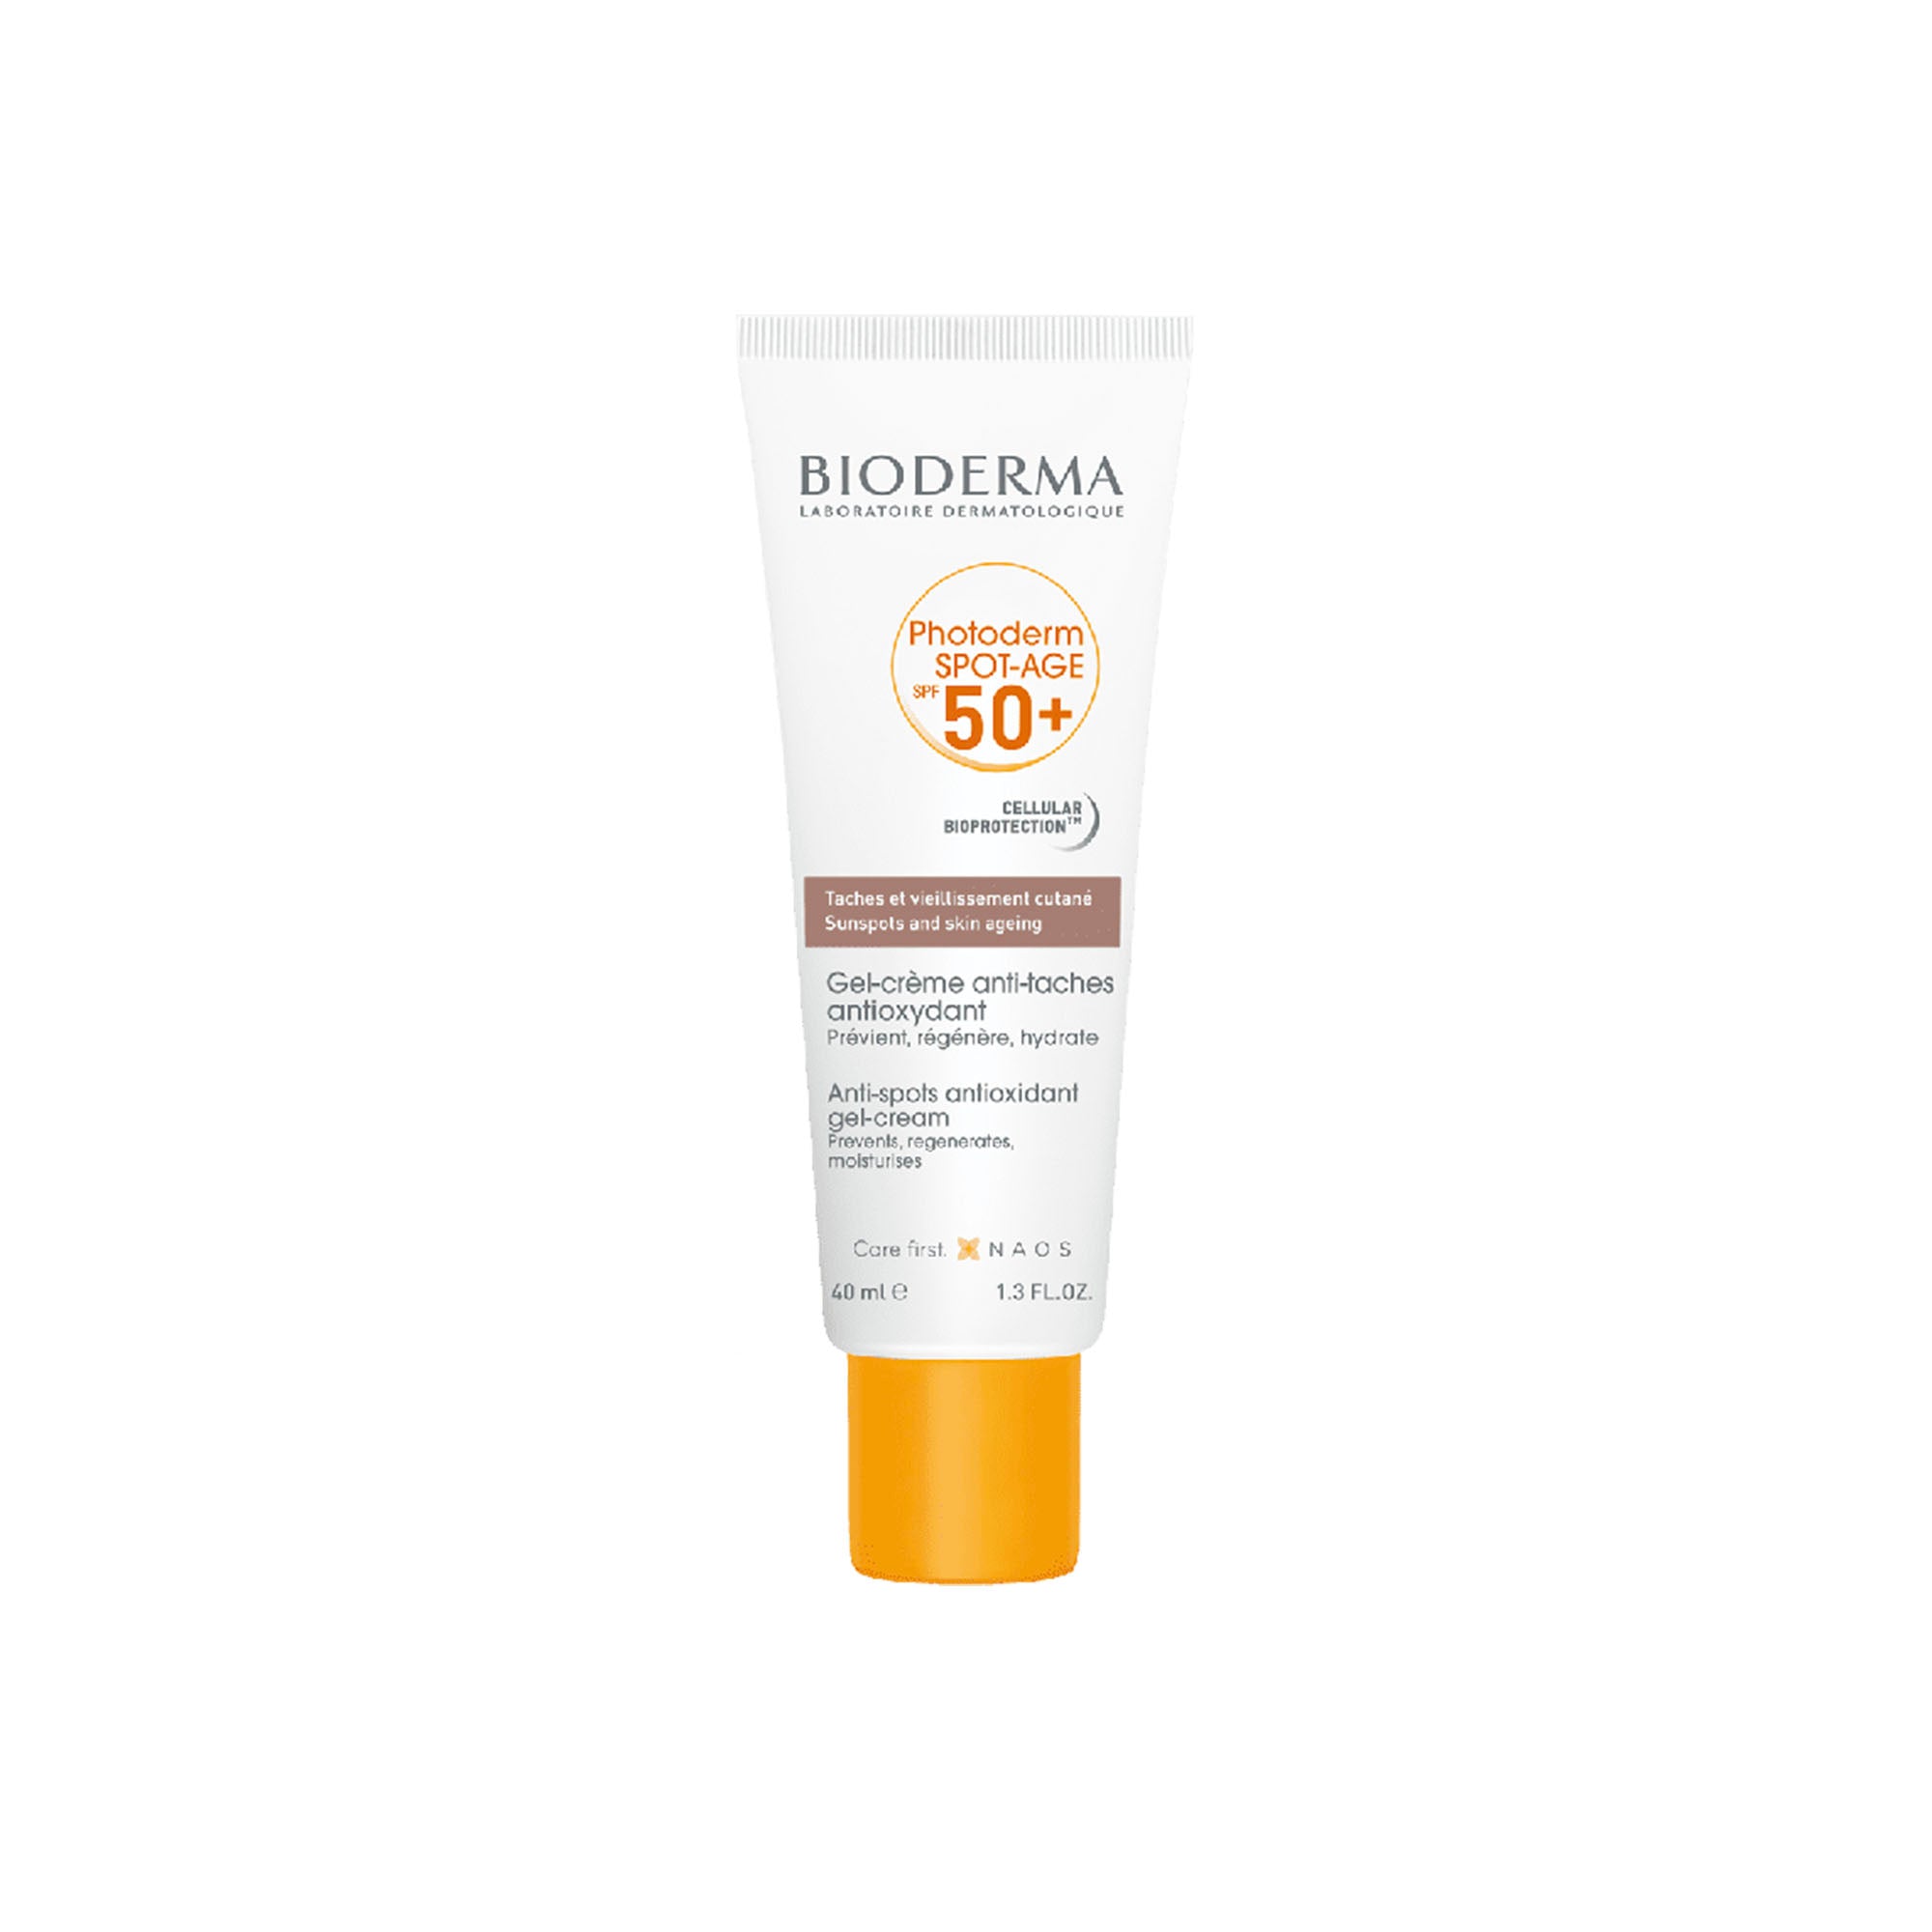 Bioderma Spot-Age Cream SPF50+ | Photoderm Spot-Age Cream SPF 50+ 40ml